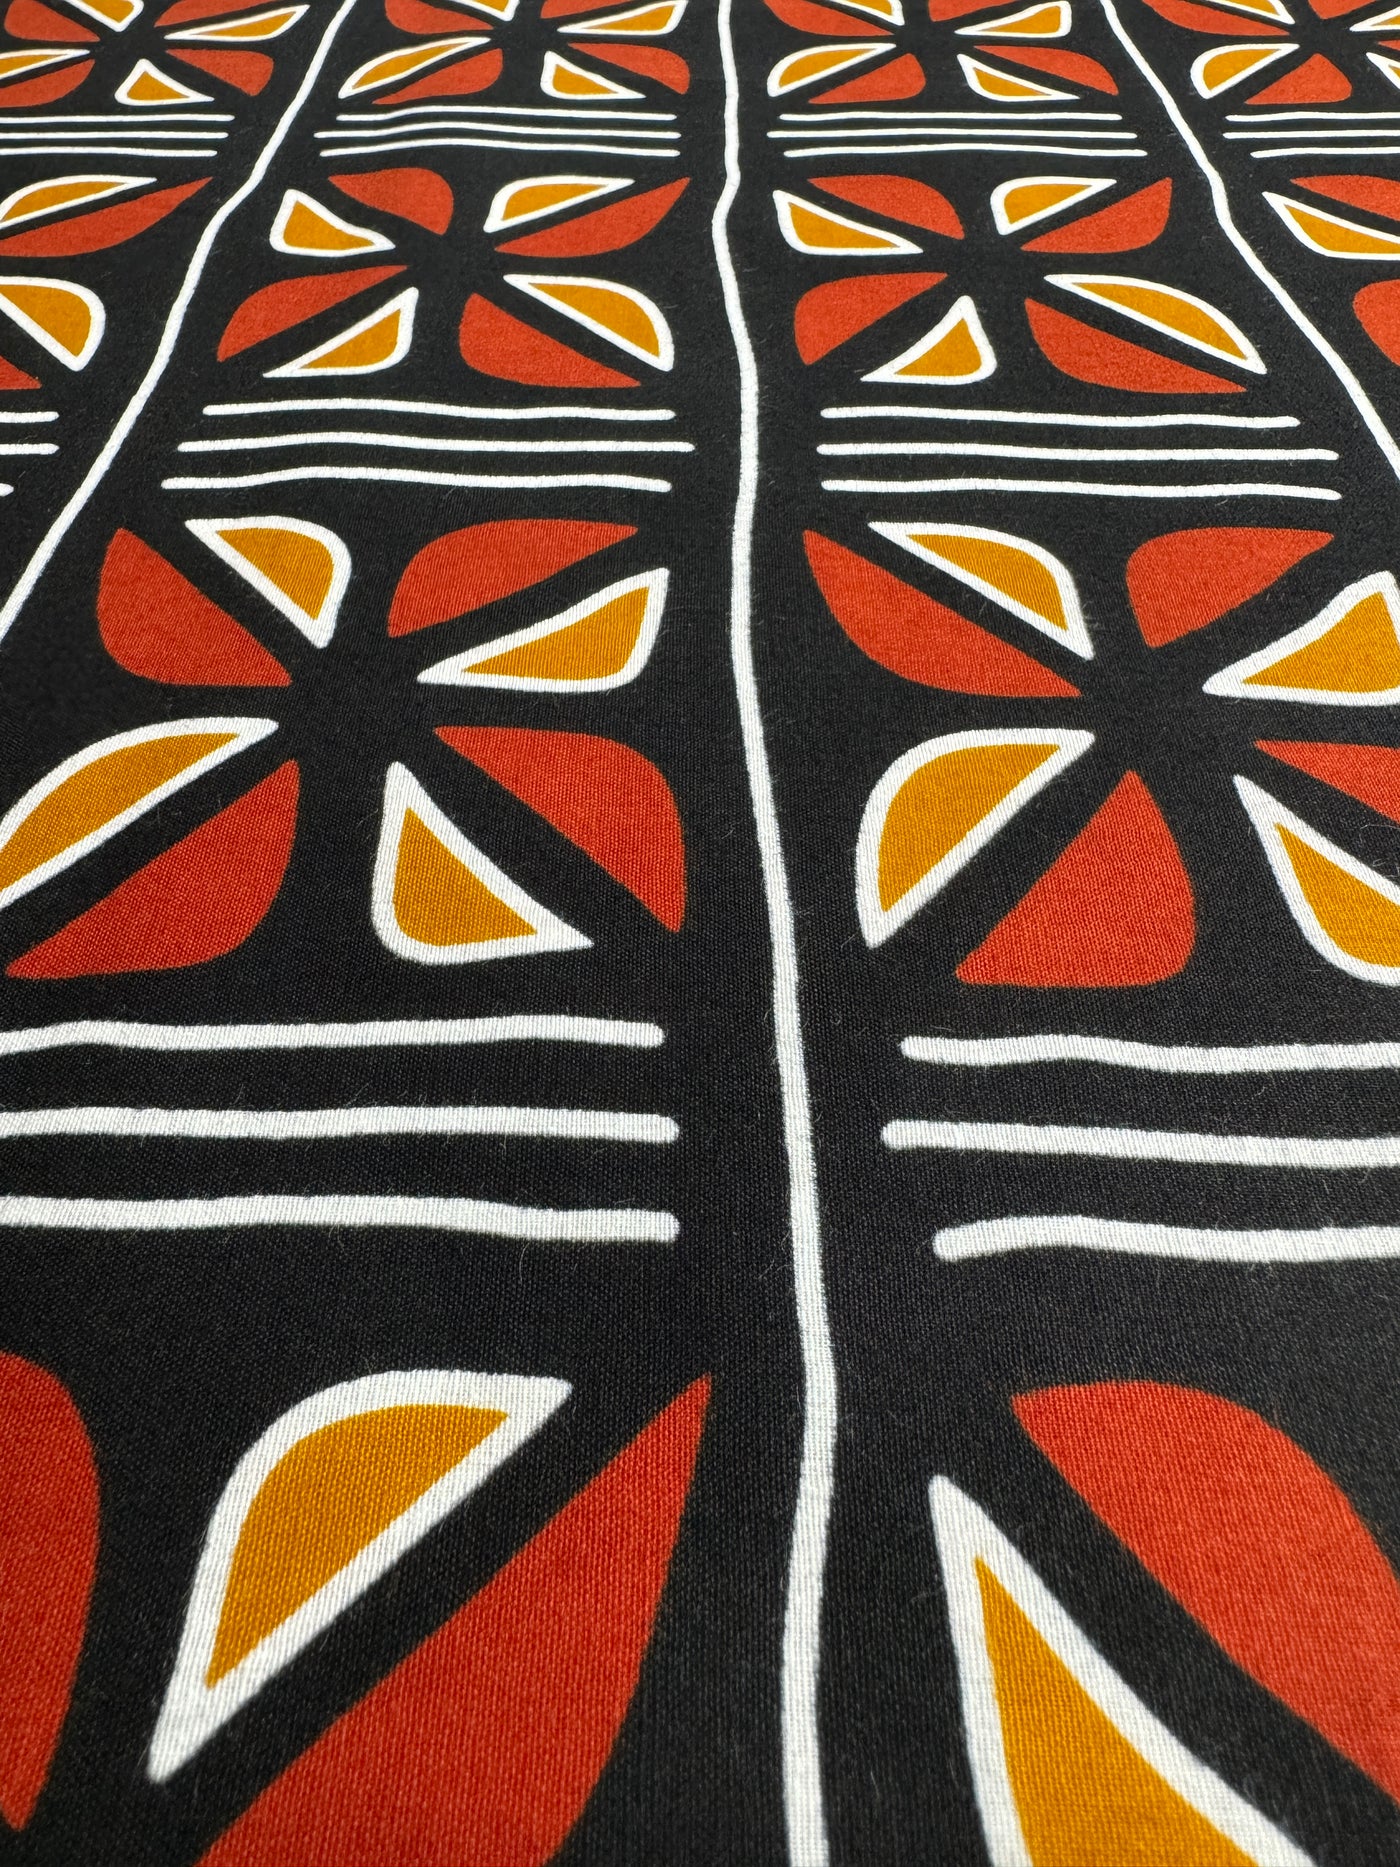 Tribal Fabric - 3219810